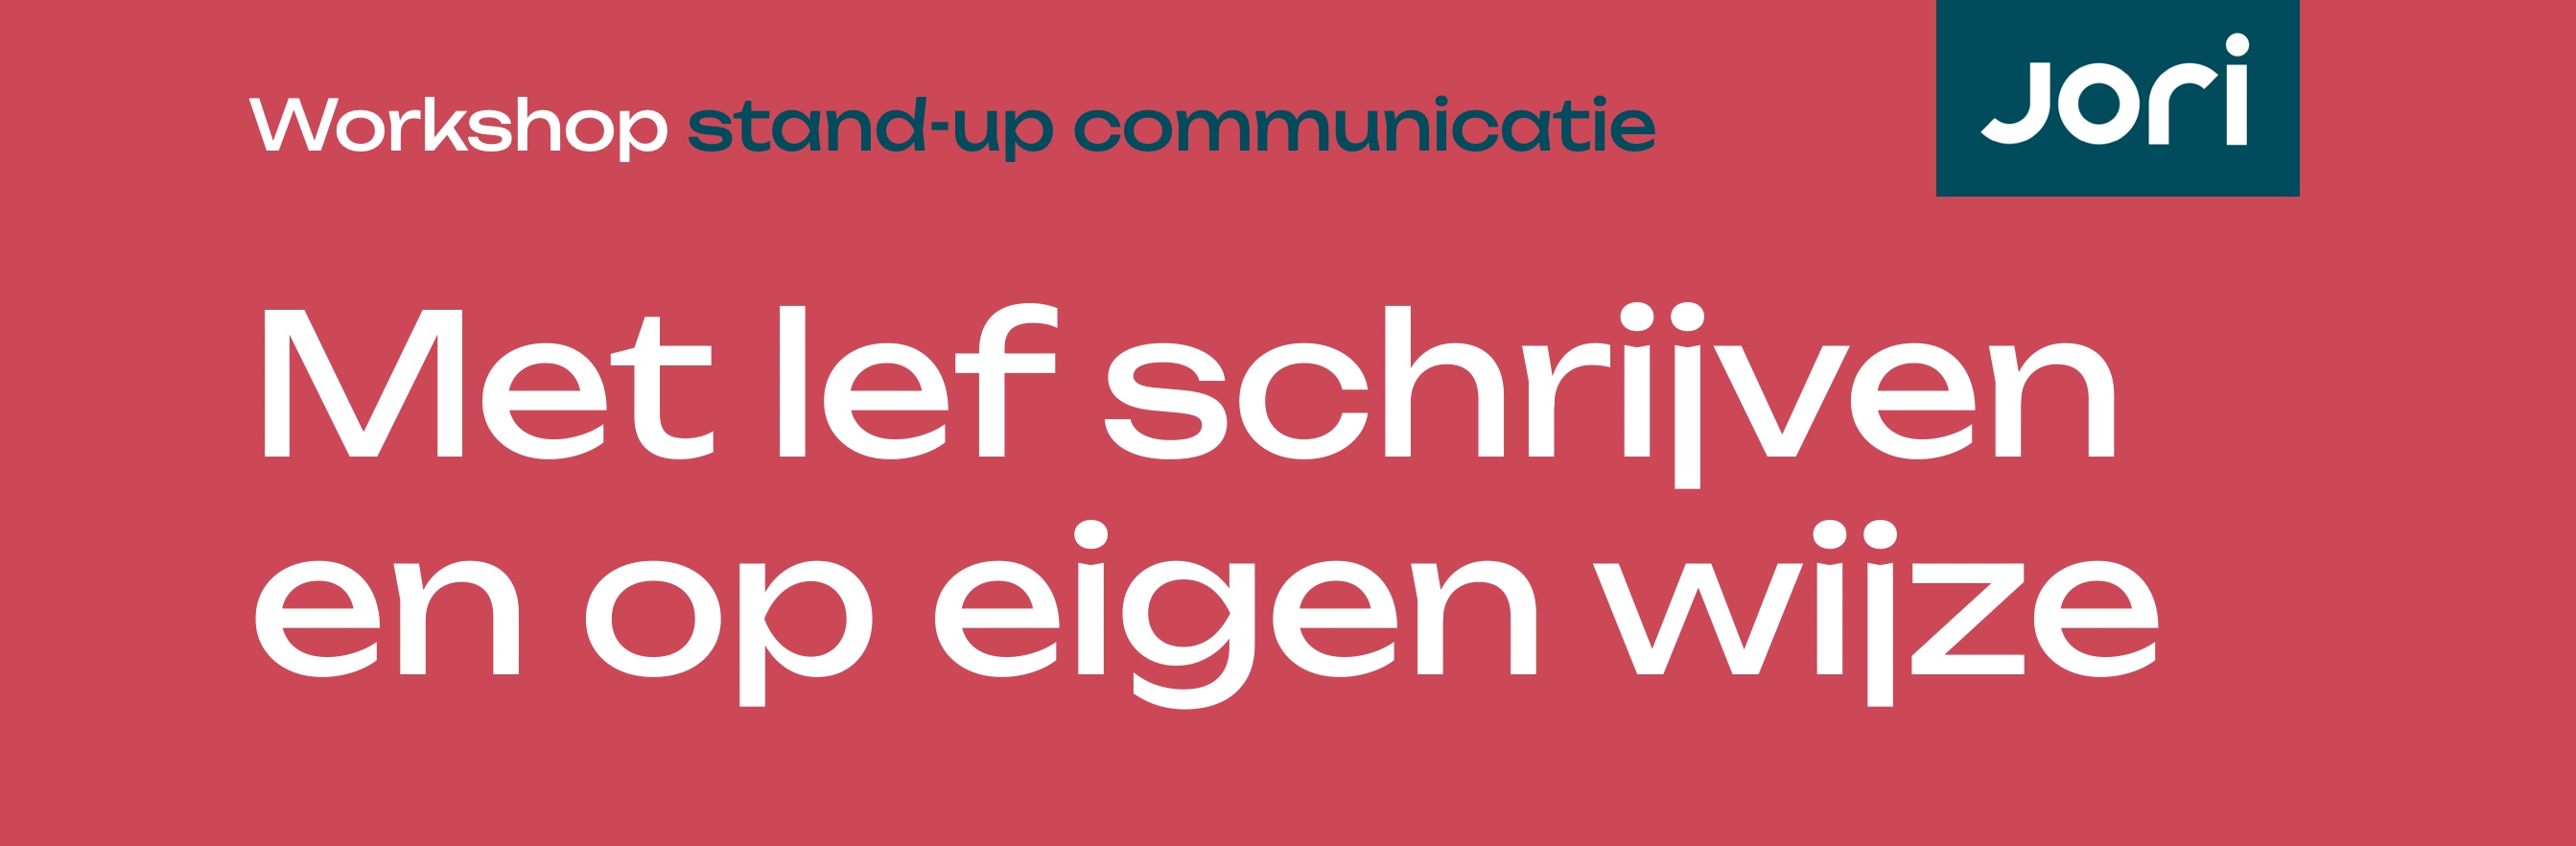 https://www.jori.nl/assets/training-workshop-stand-up-communucatie-burojori.jpg